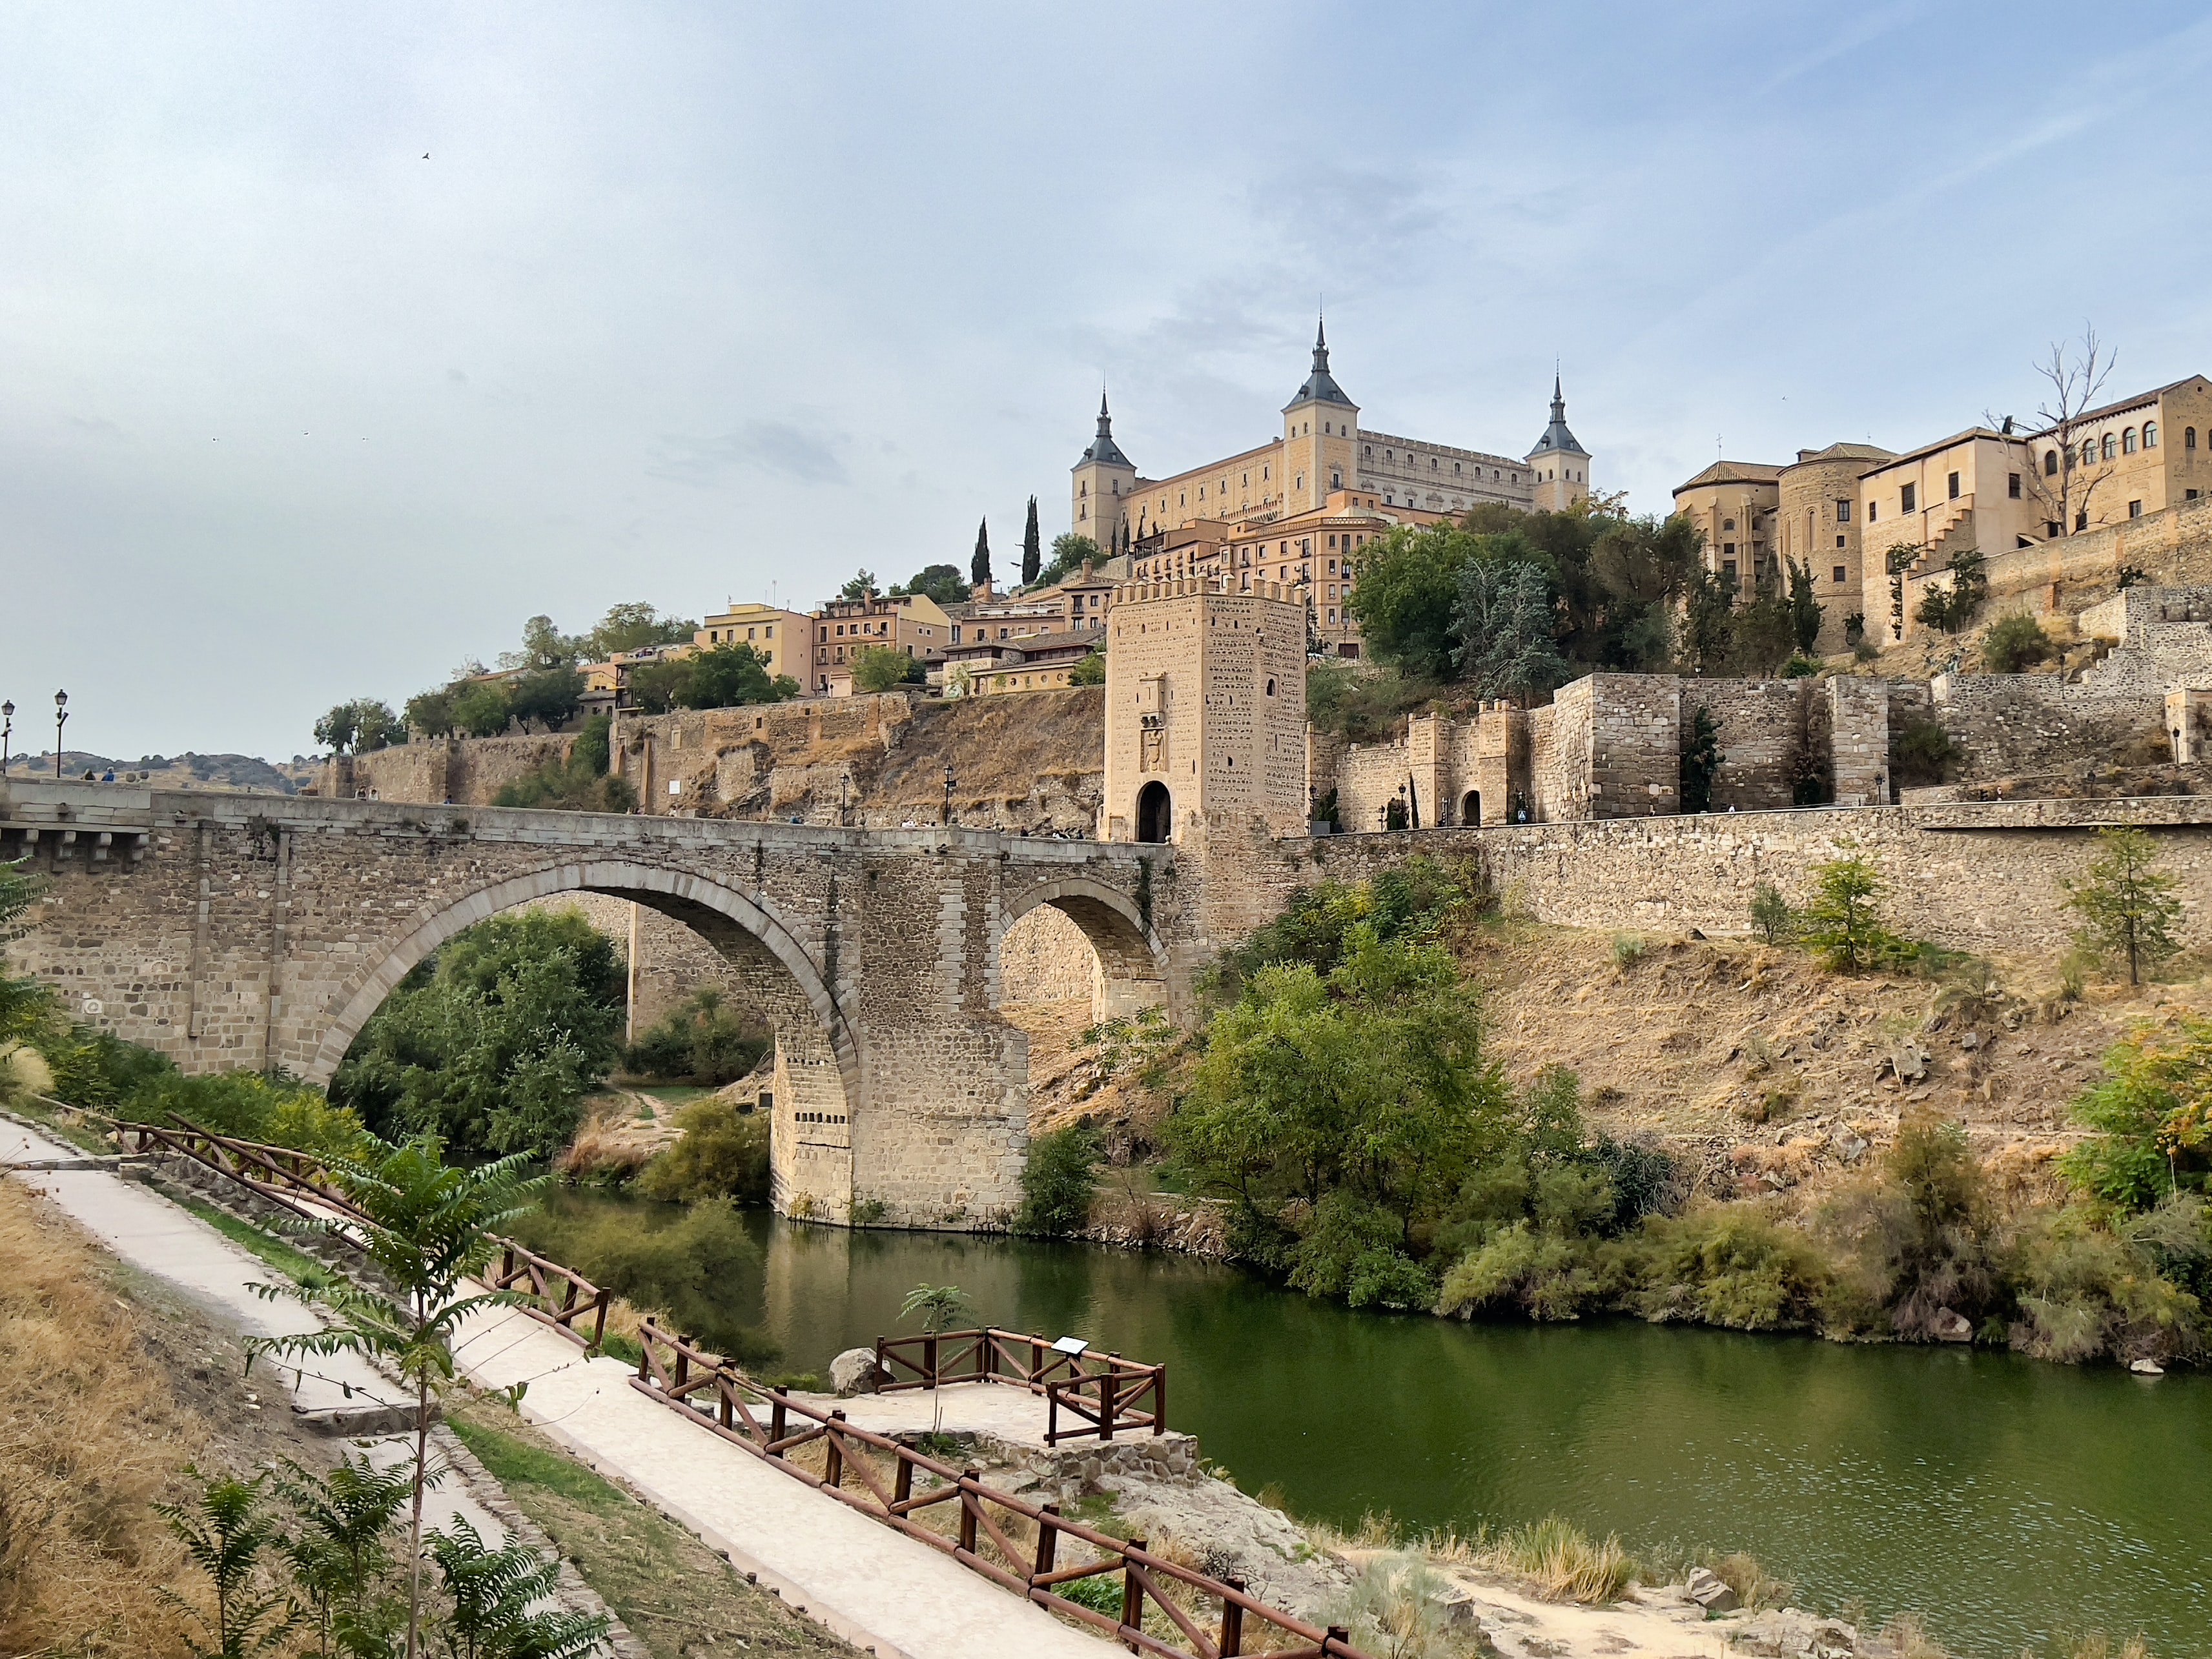 Day 14: Granada - Toledo - Madrid